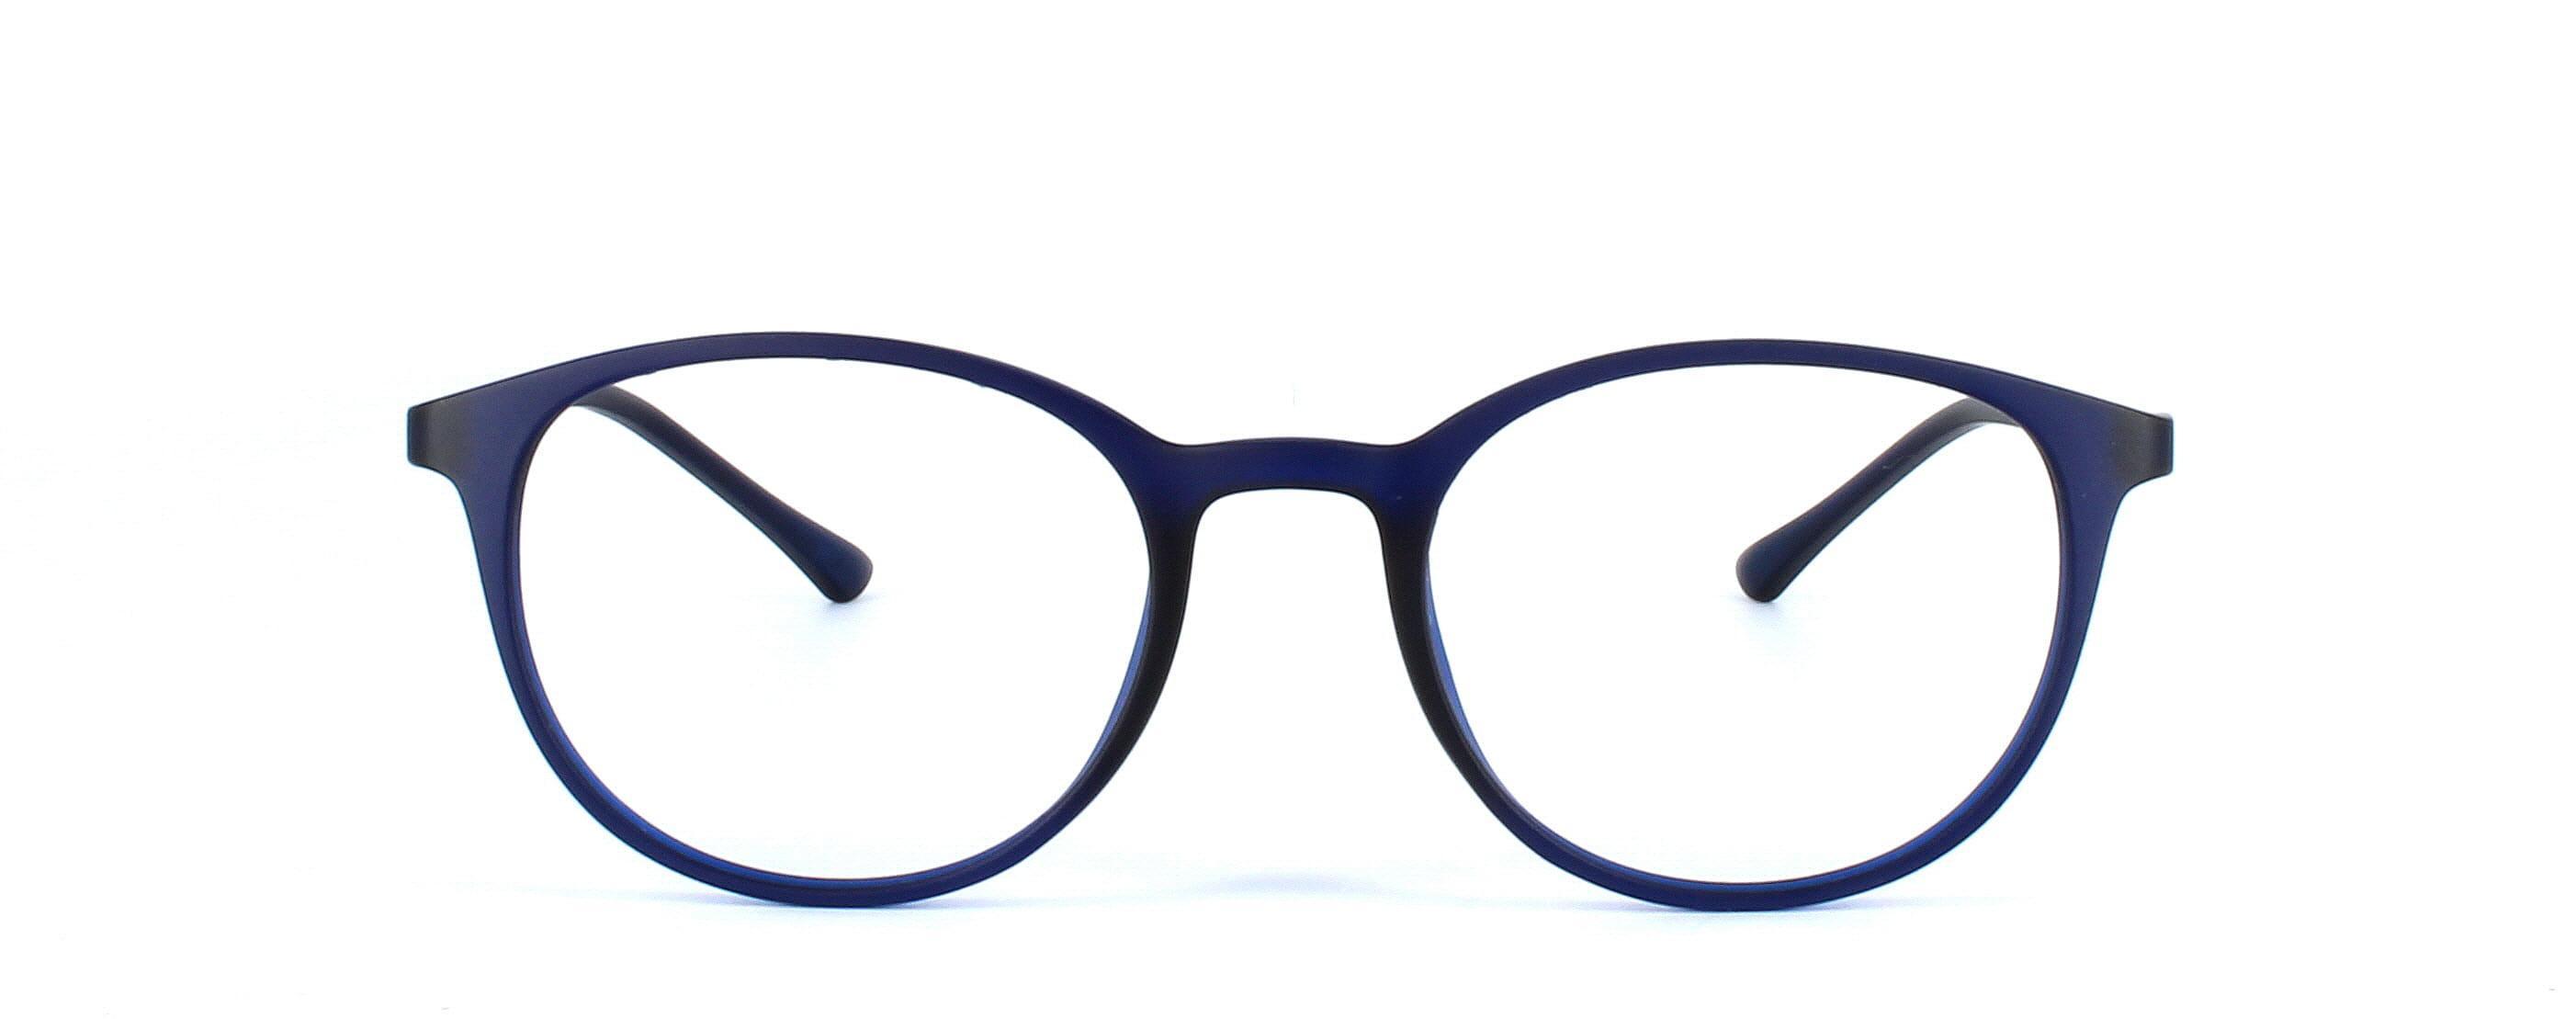 Mensa - Blue - Ladies round shaped plastic glasses - image view 5